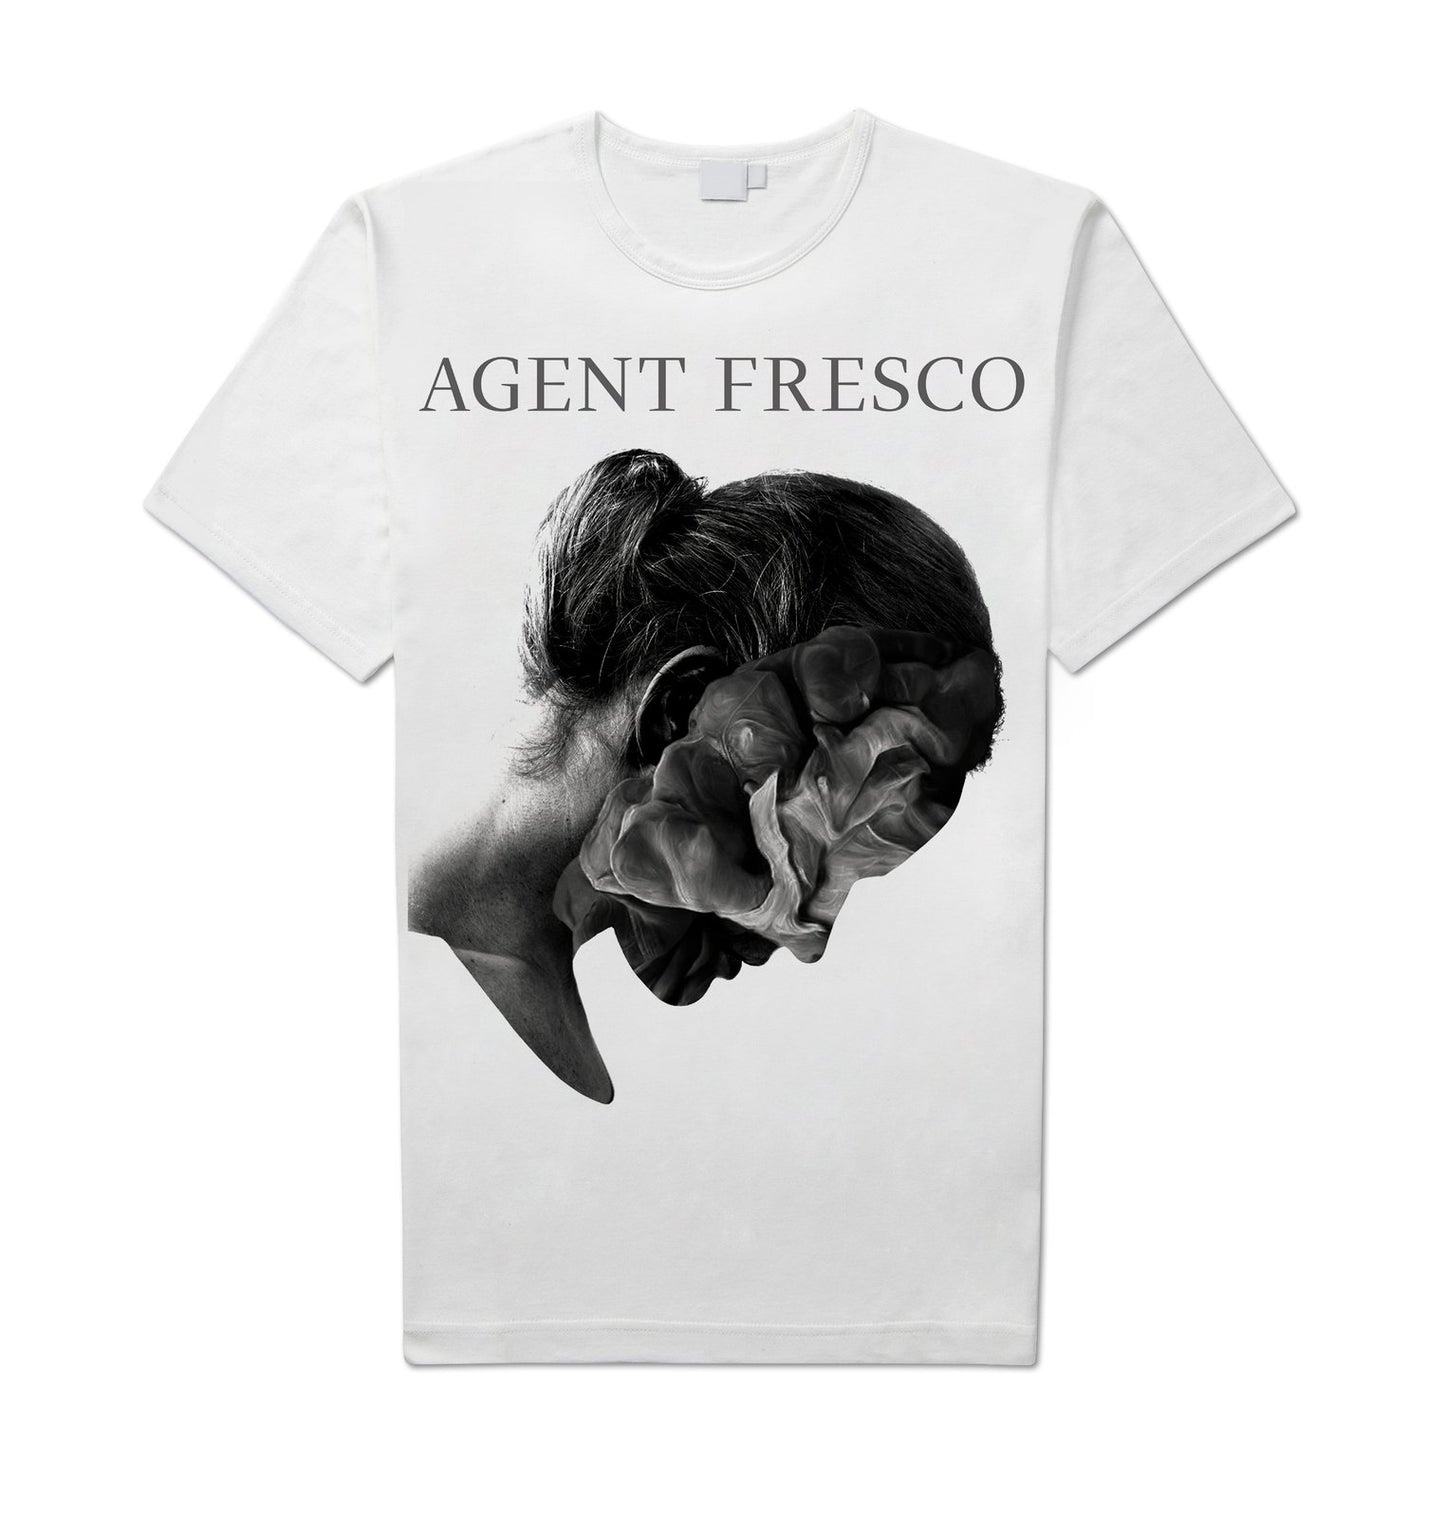 Agent Fresco "Destrier" LP-Bundle "See Hell"